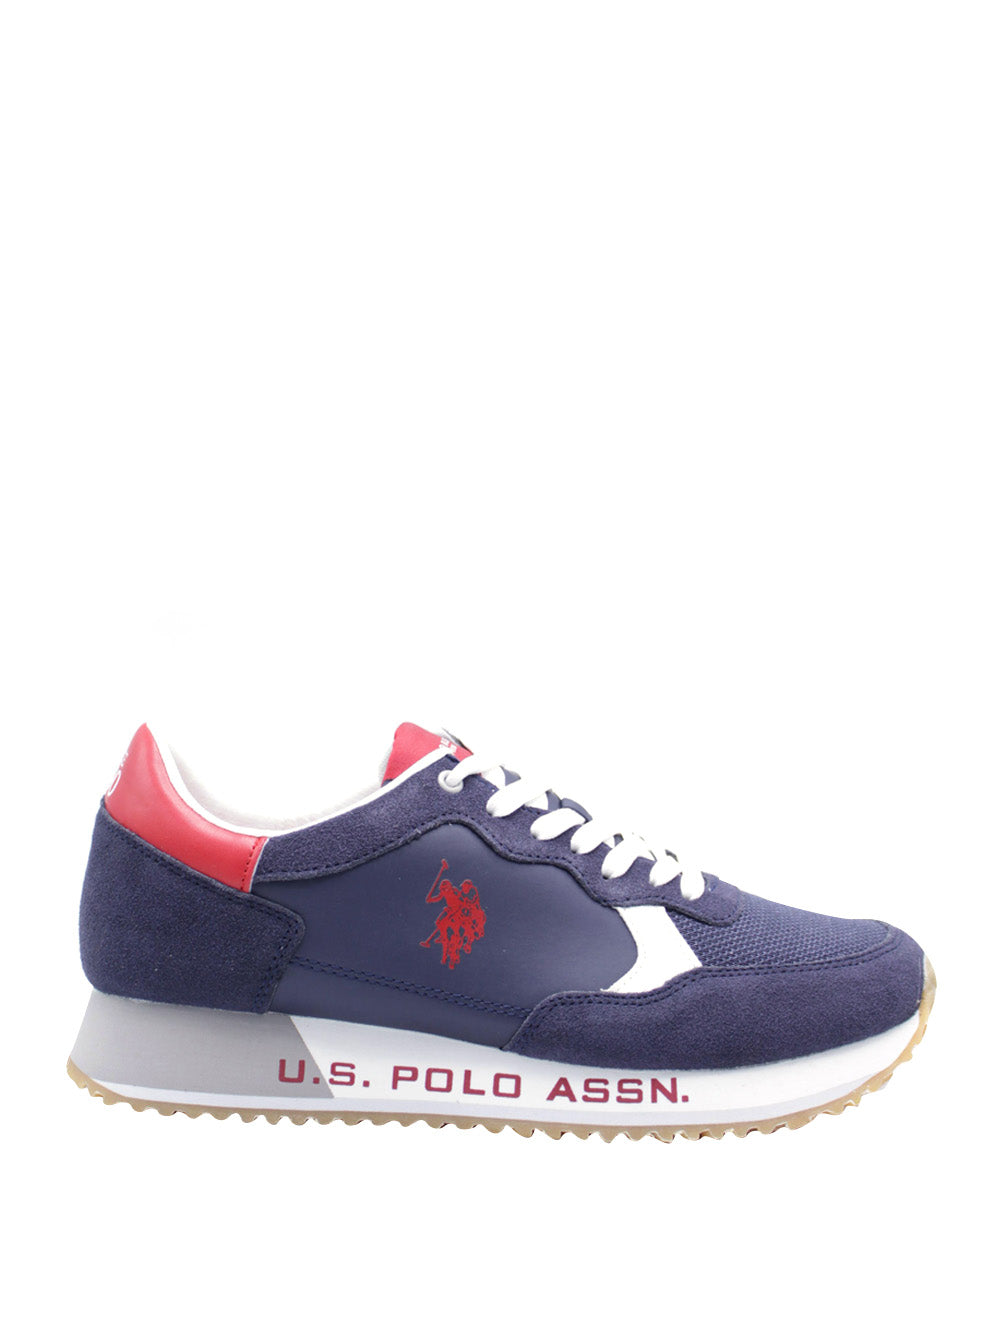 U.S. POLO ASSN. Sneakers Uomo - Blu modello CLEEF006